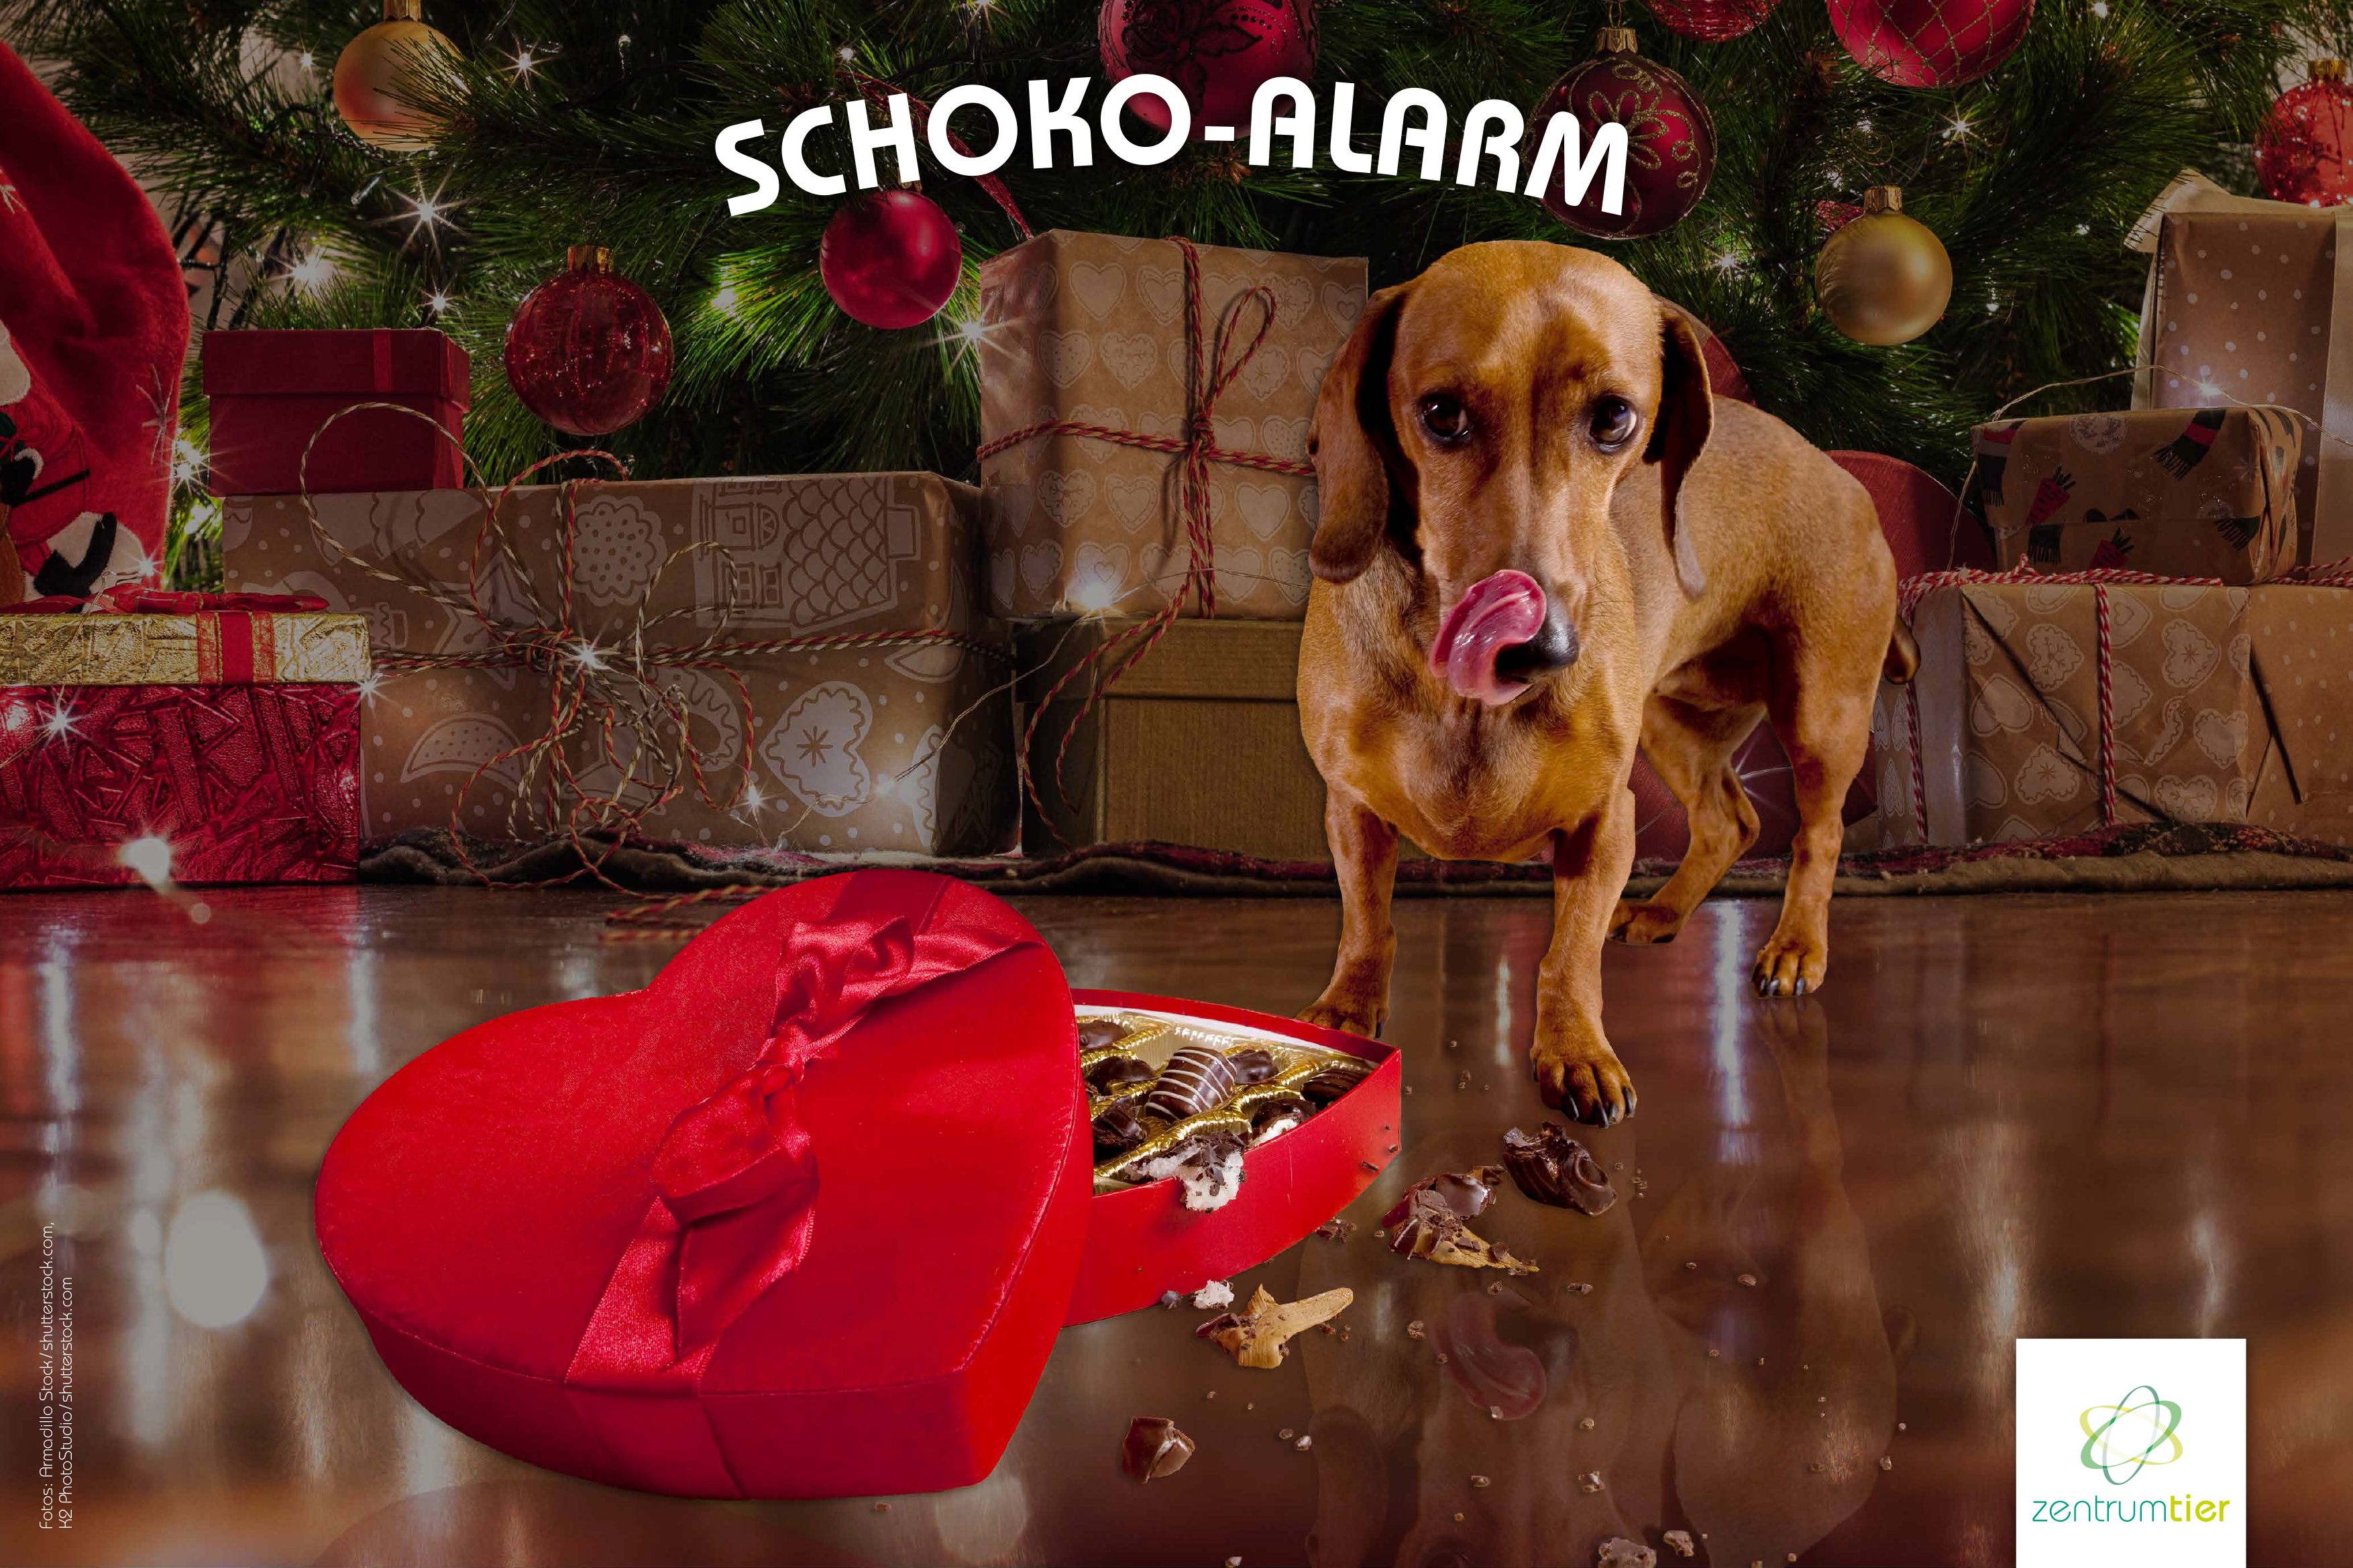 FB: Schoko-Alarm